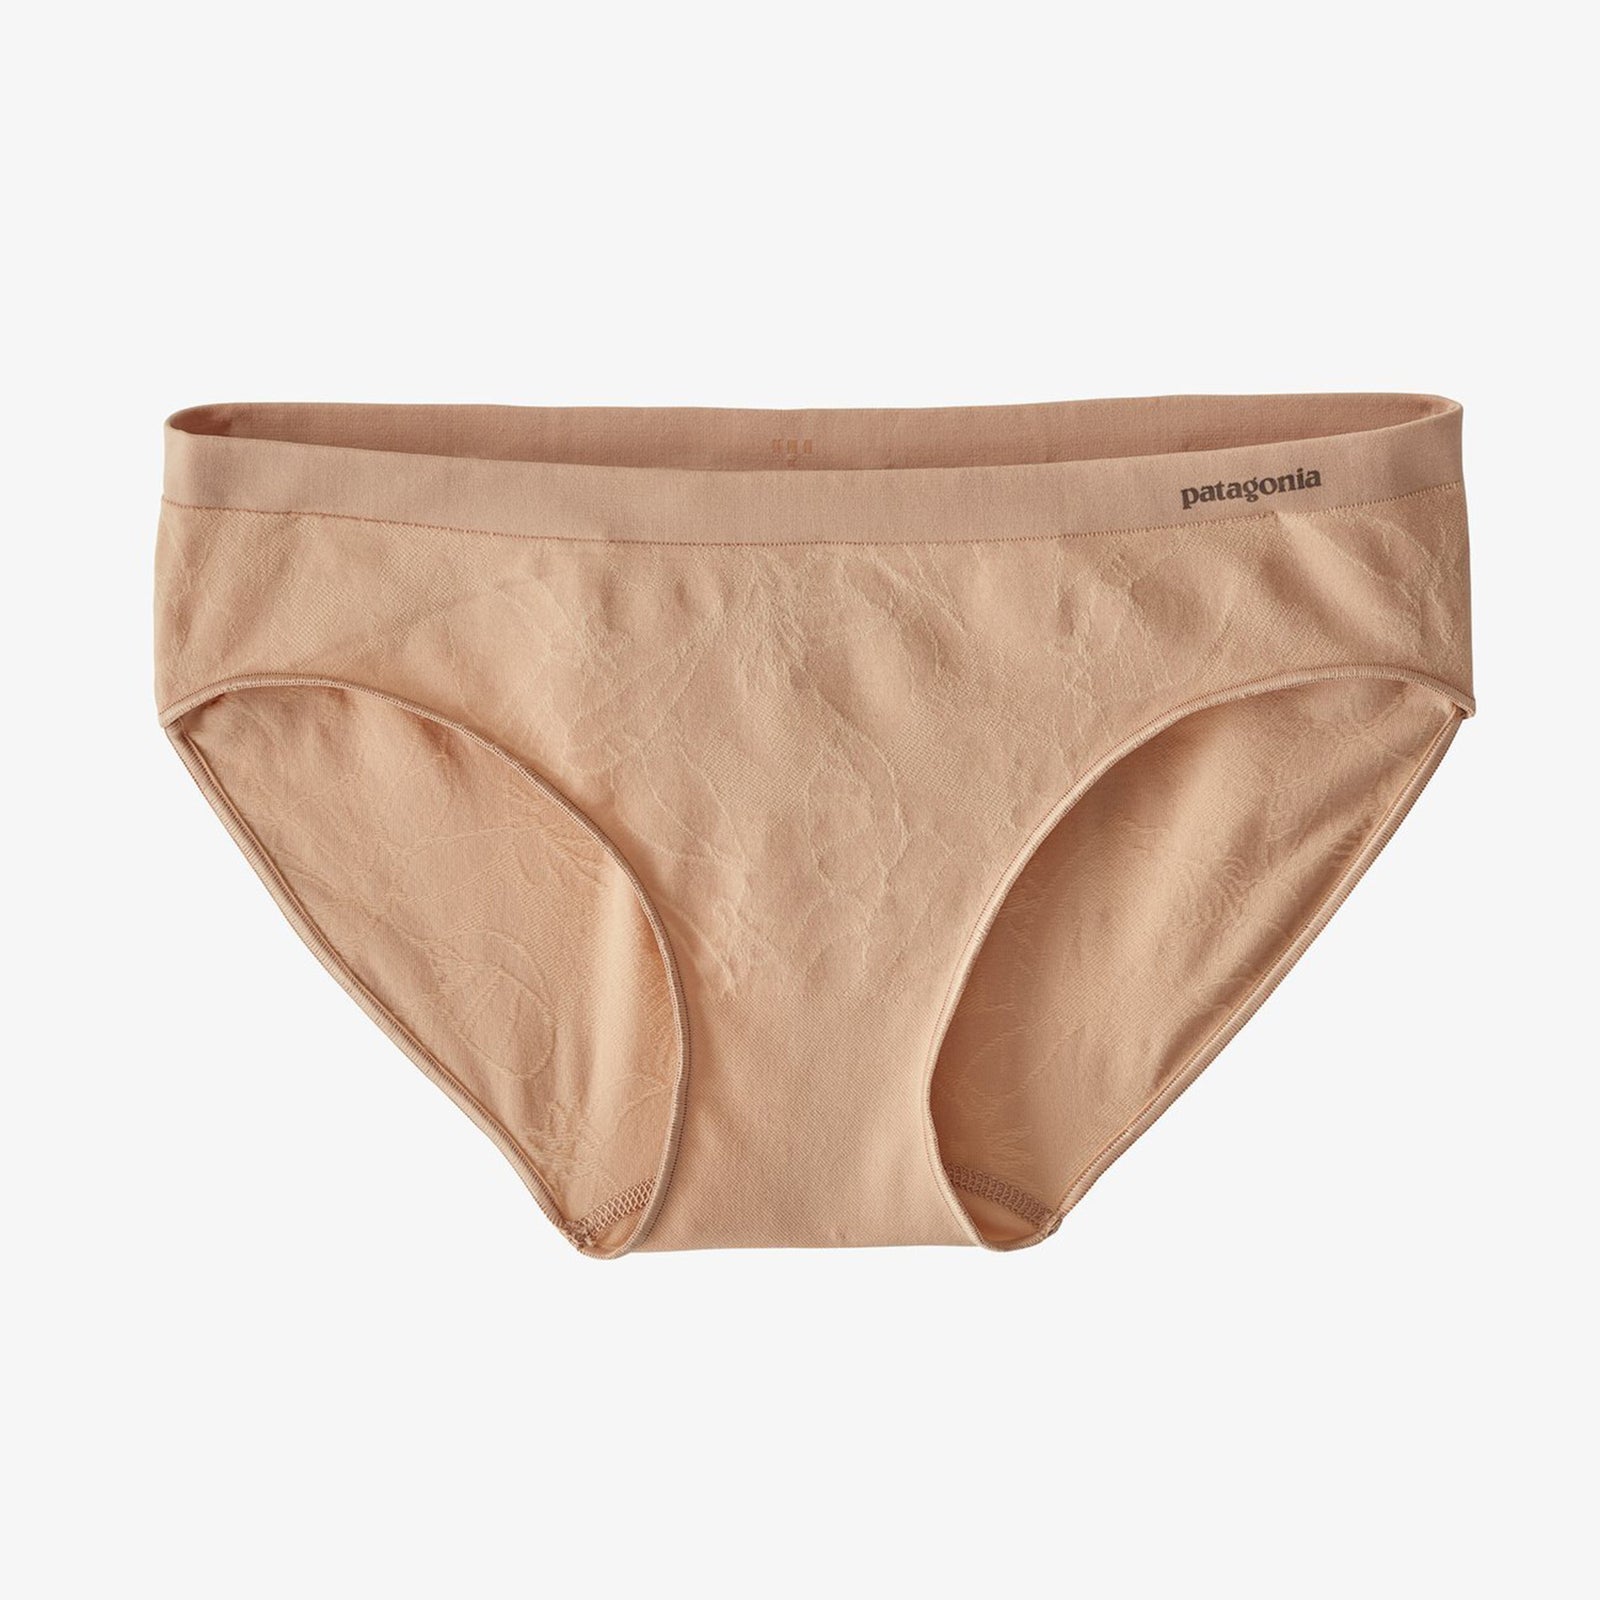 Patagonia Underwear in Eugene, OR